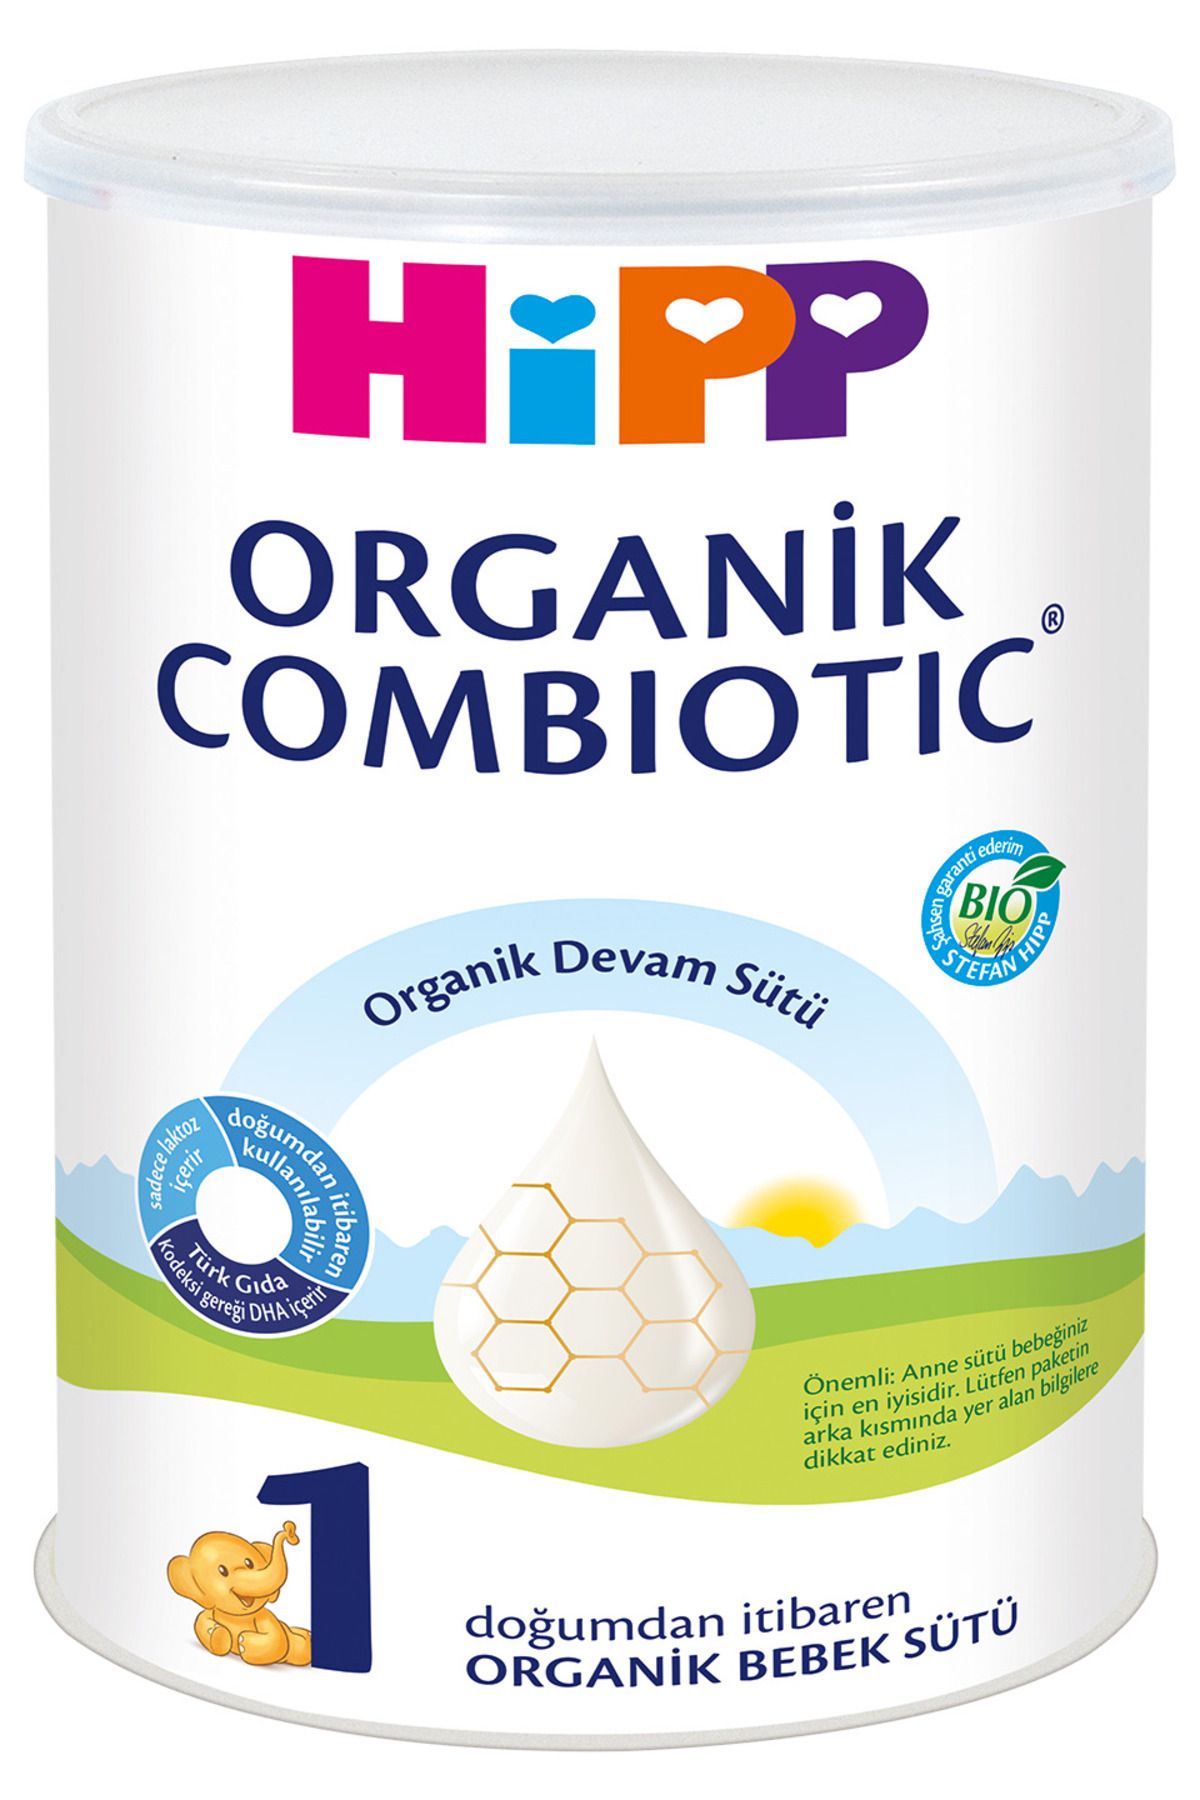 Hipp 1 Organic Combiotic Bebek Sütü 350 gr